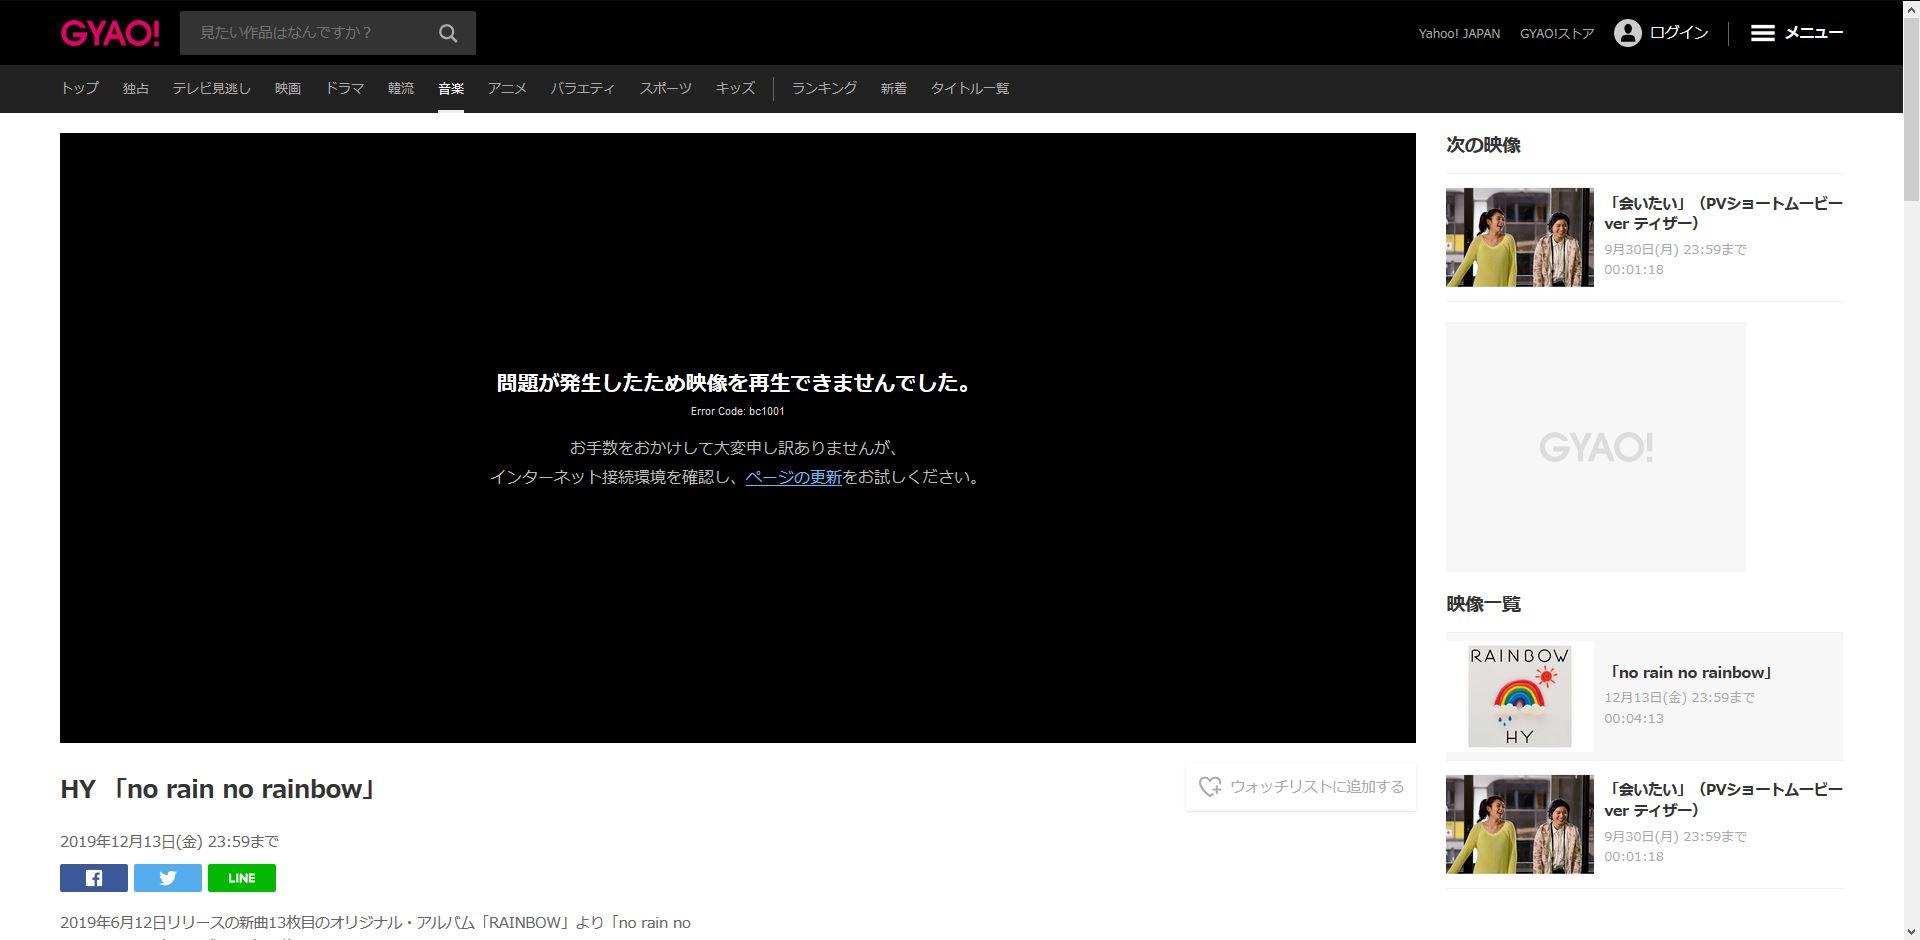 GYAO Japanese Music PV Portal